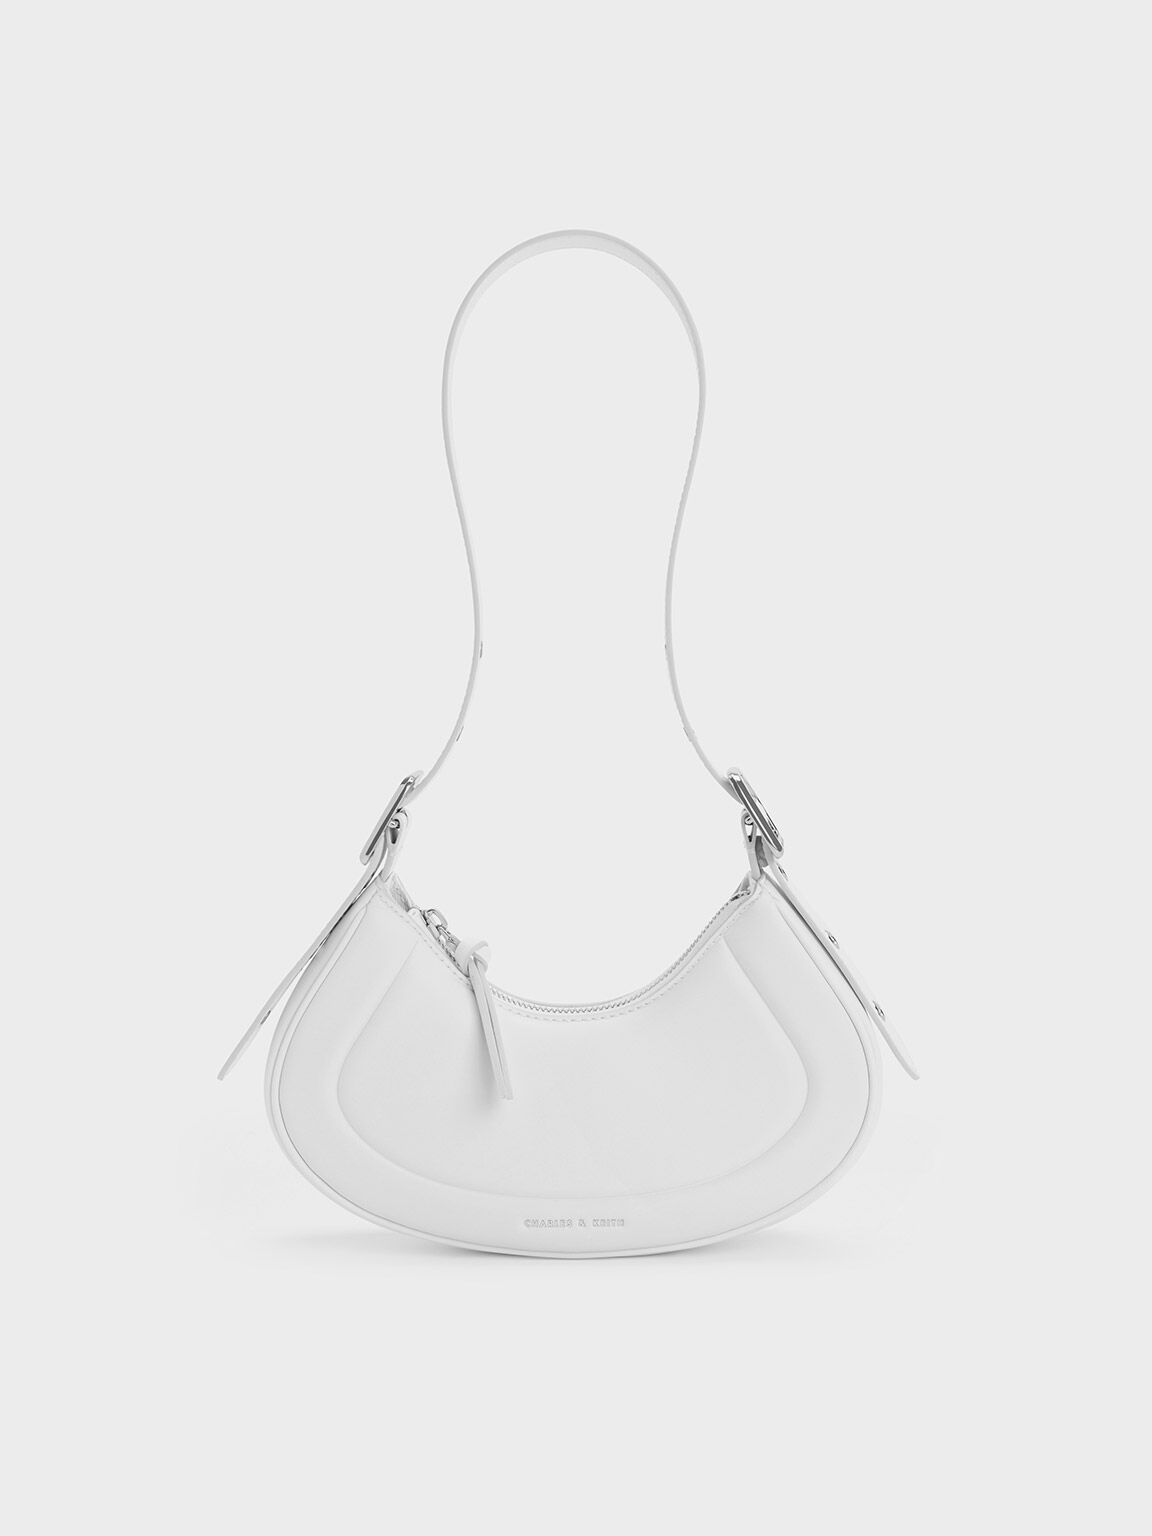 Kate Spade Women's Shoulder Bag White [Parallel Import], white: Handbags:  Amazon.com